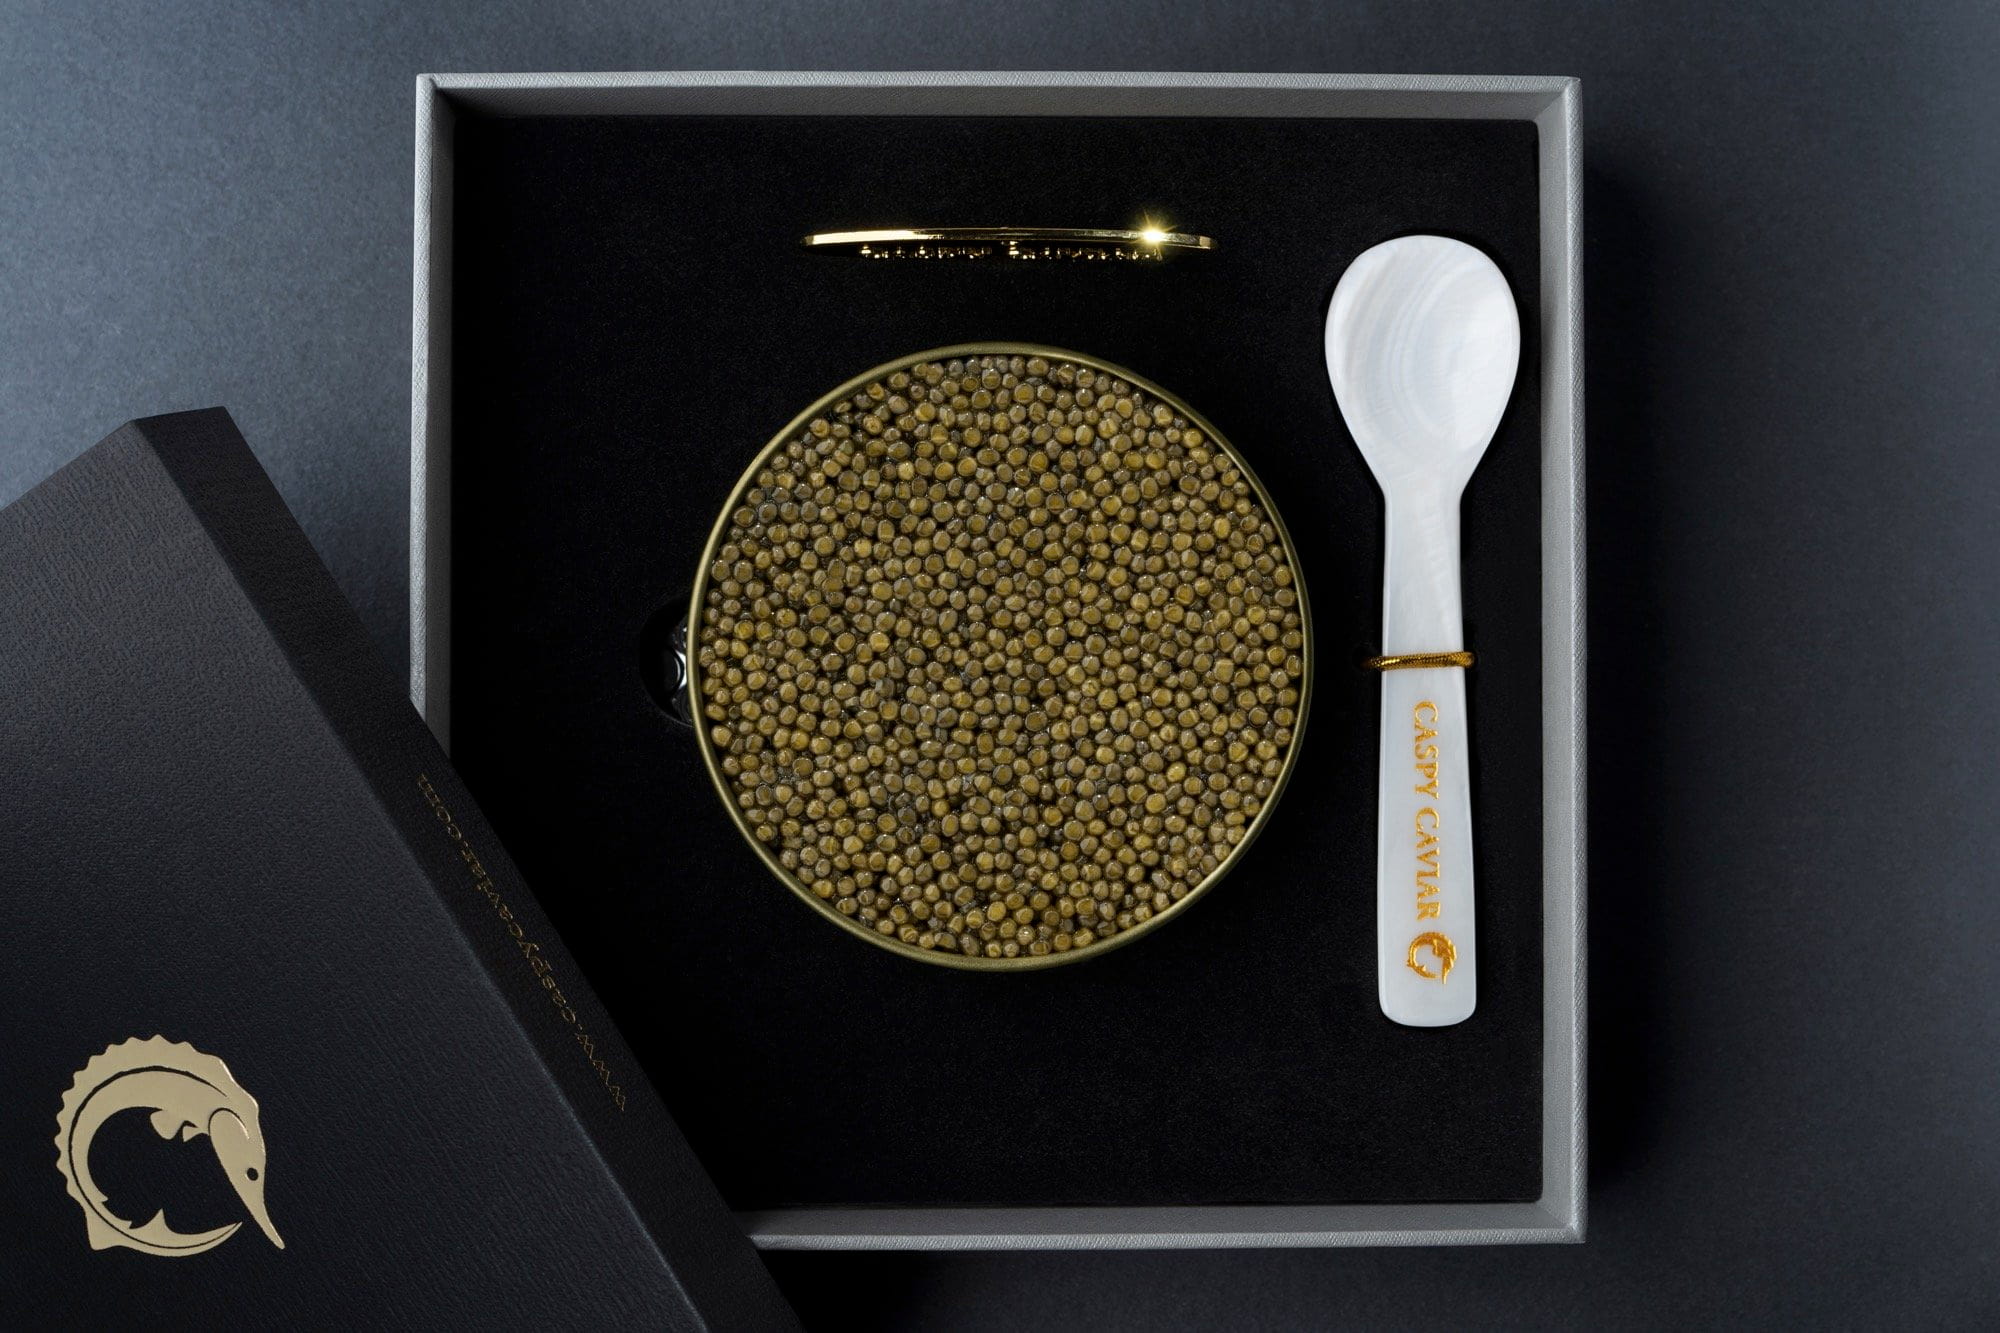 variety of caspy caviar 